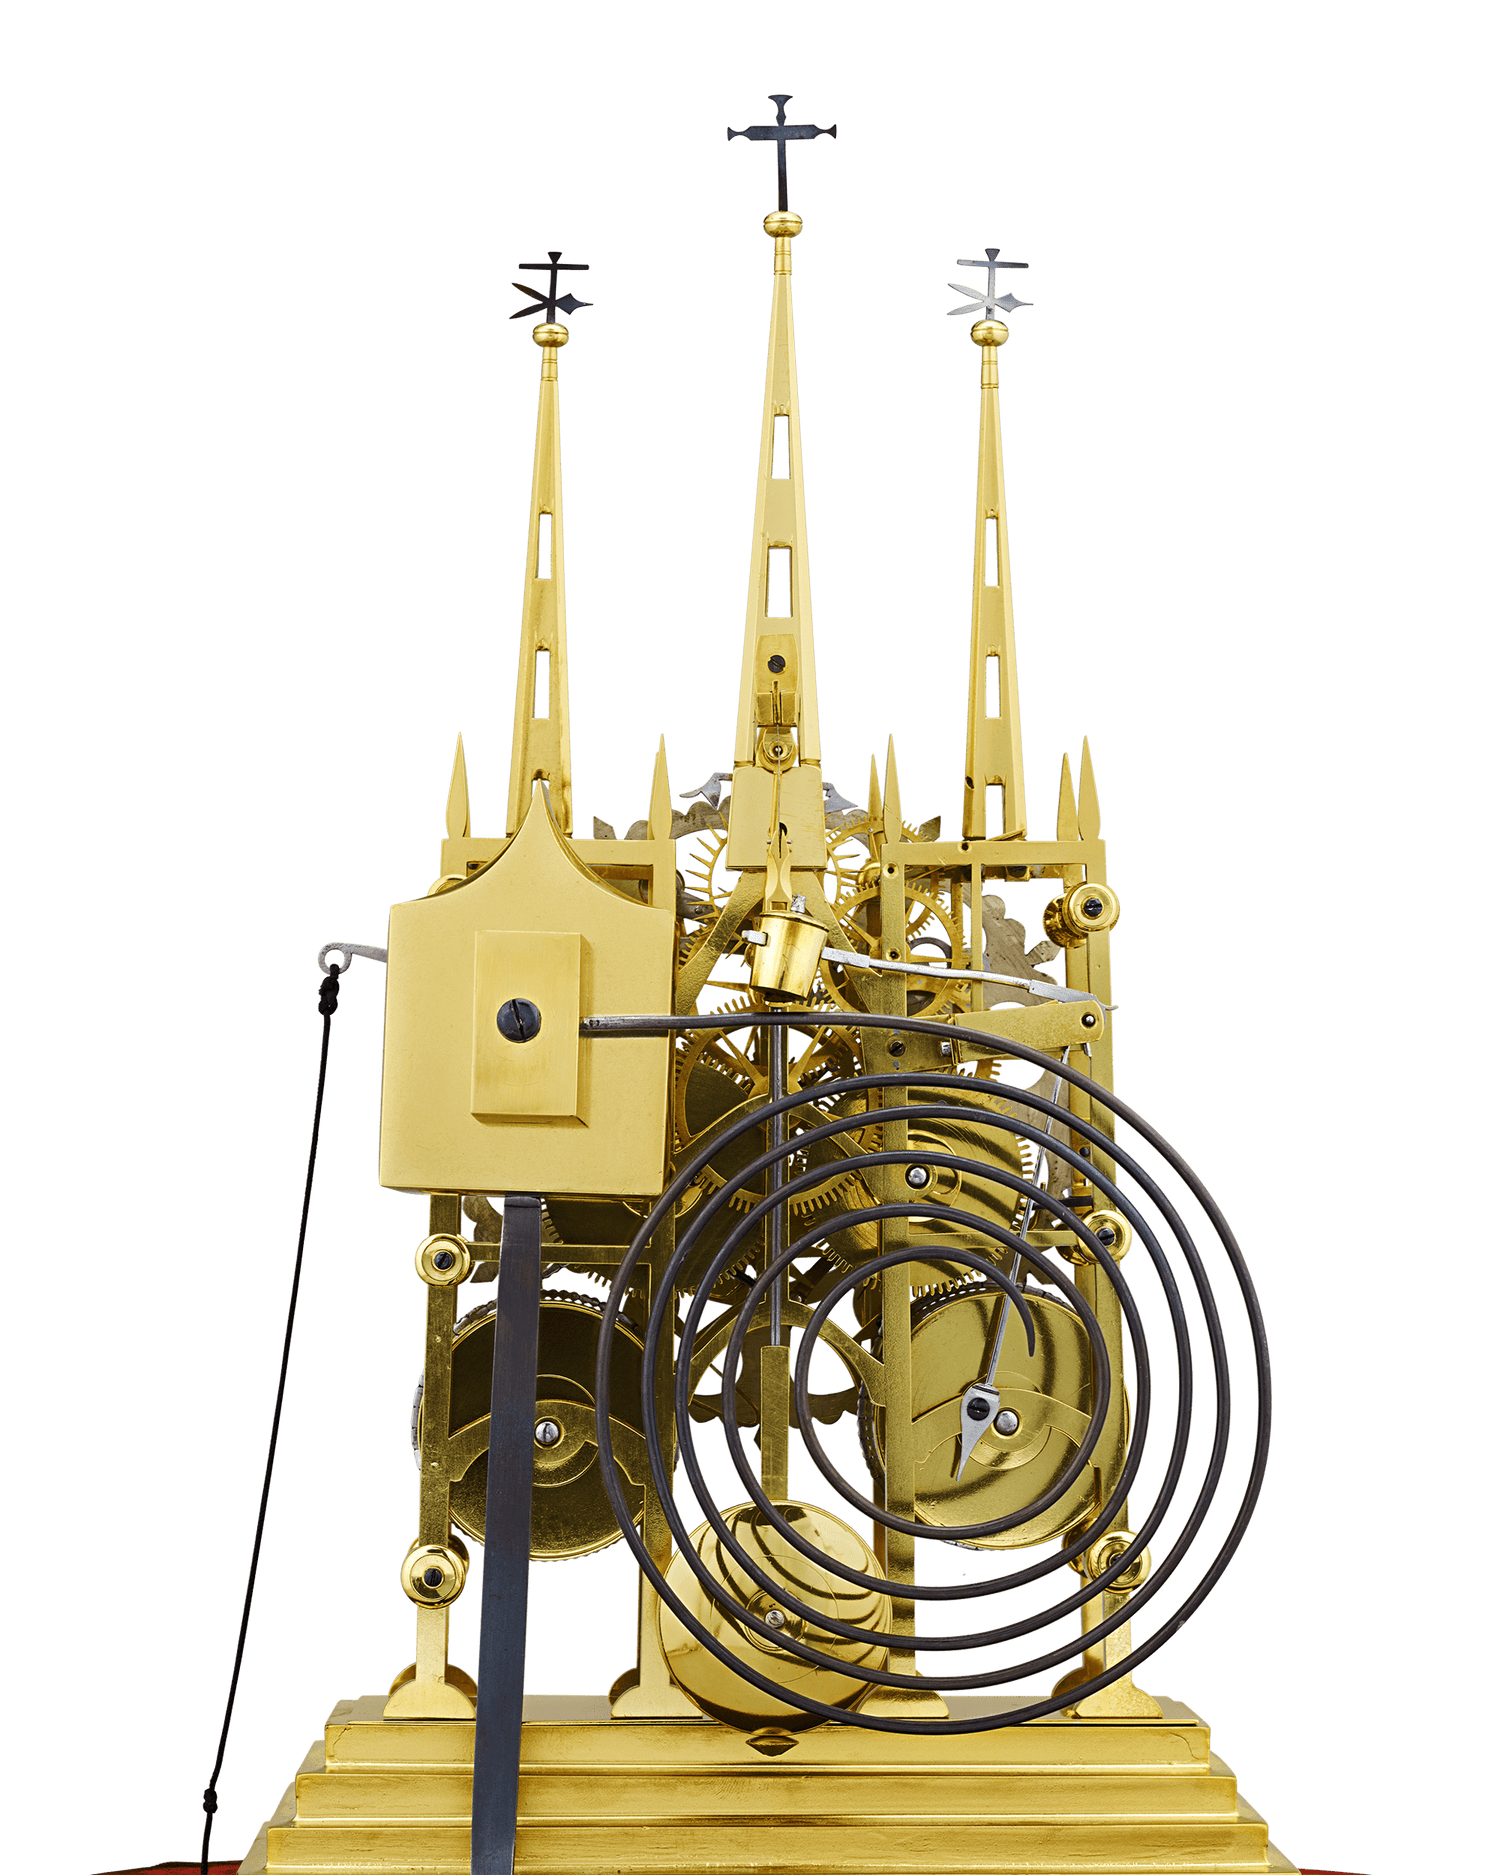 Litchfield Cathedral Skeleton Clock by Evans of Handsworth